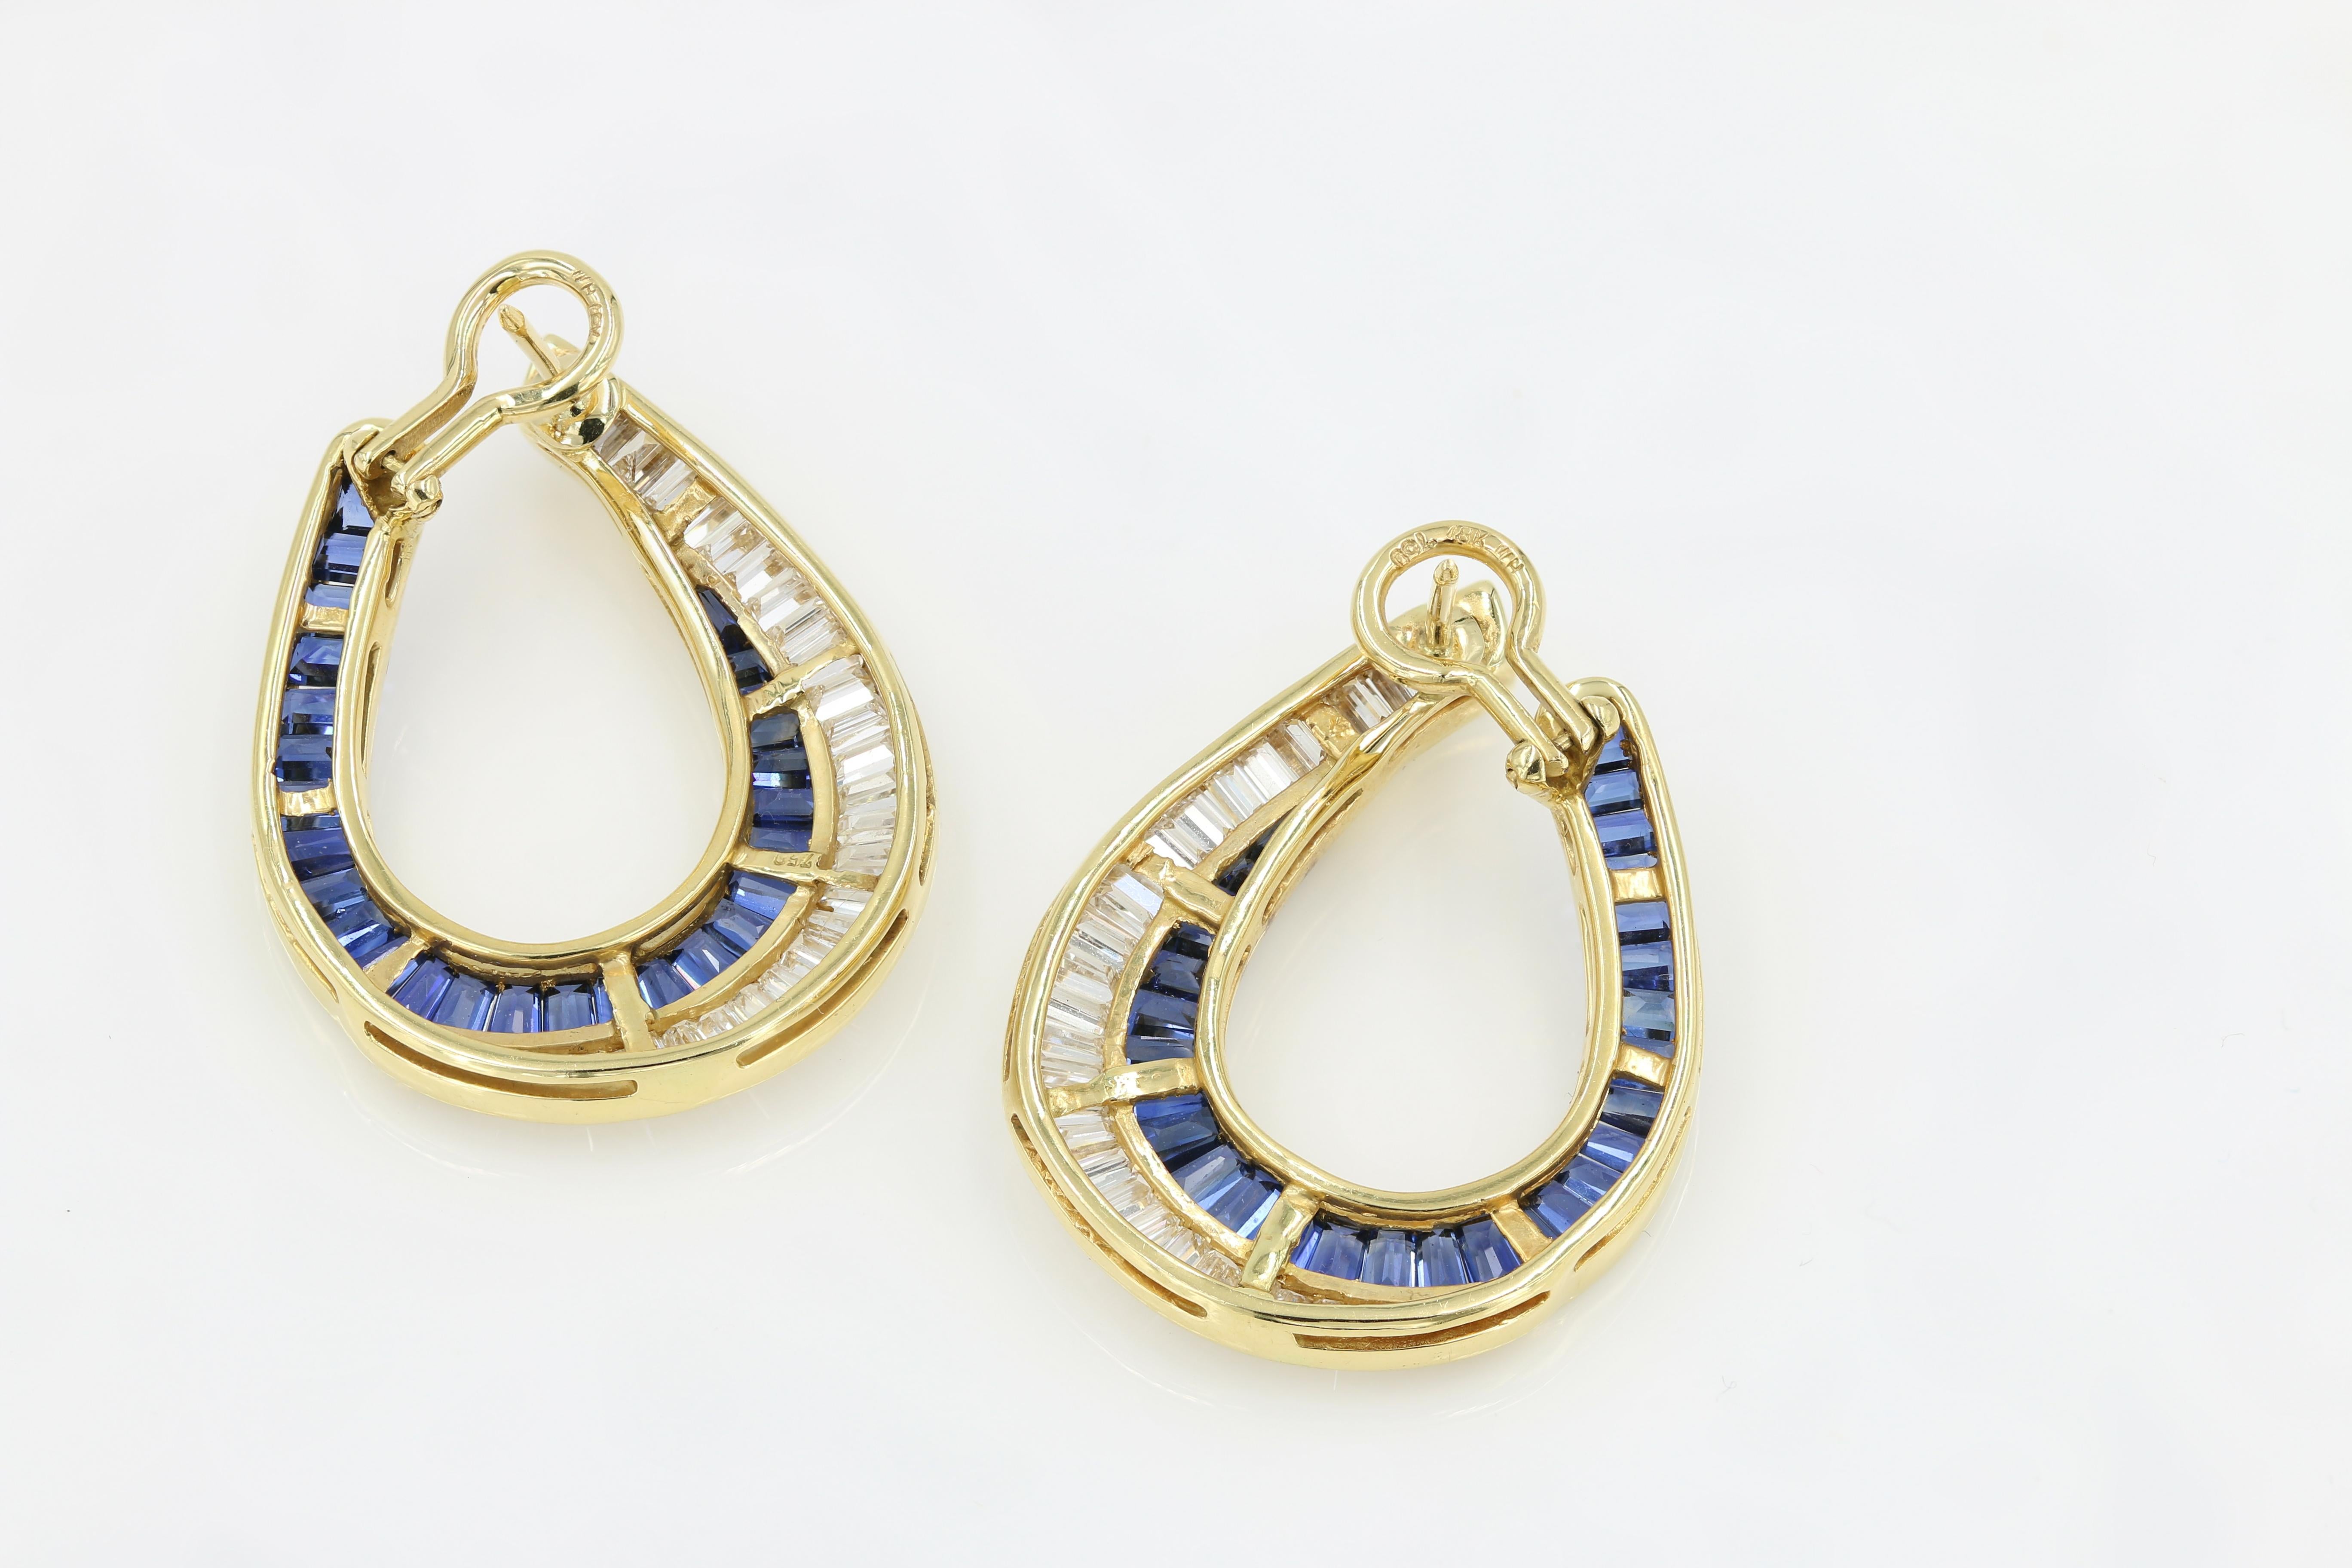 Baguette Cut Sapphire and Diamond Baguette Earrings in 18 Karat Yellow Gold